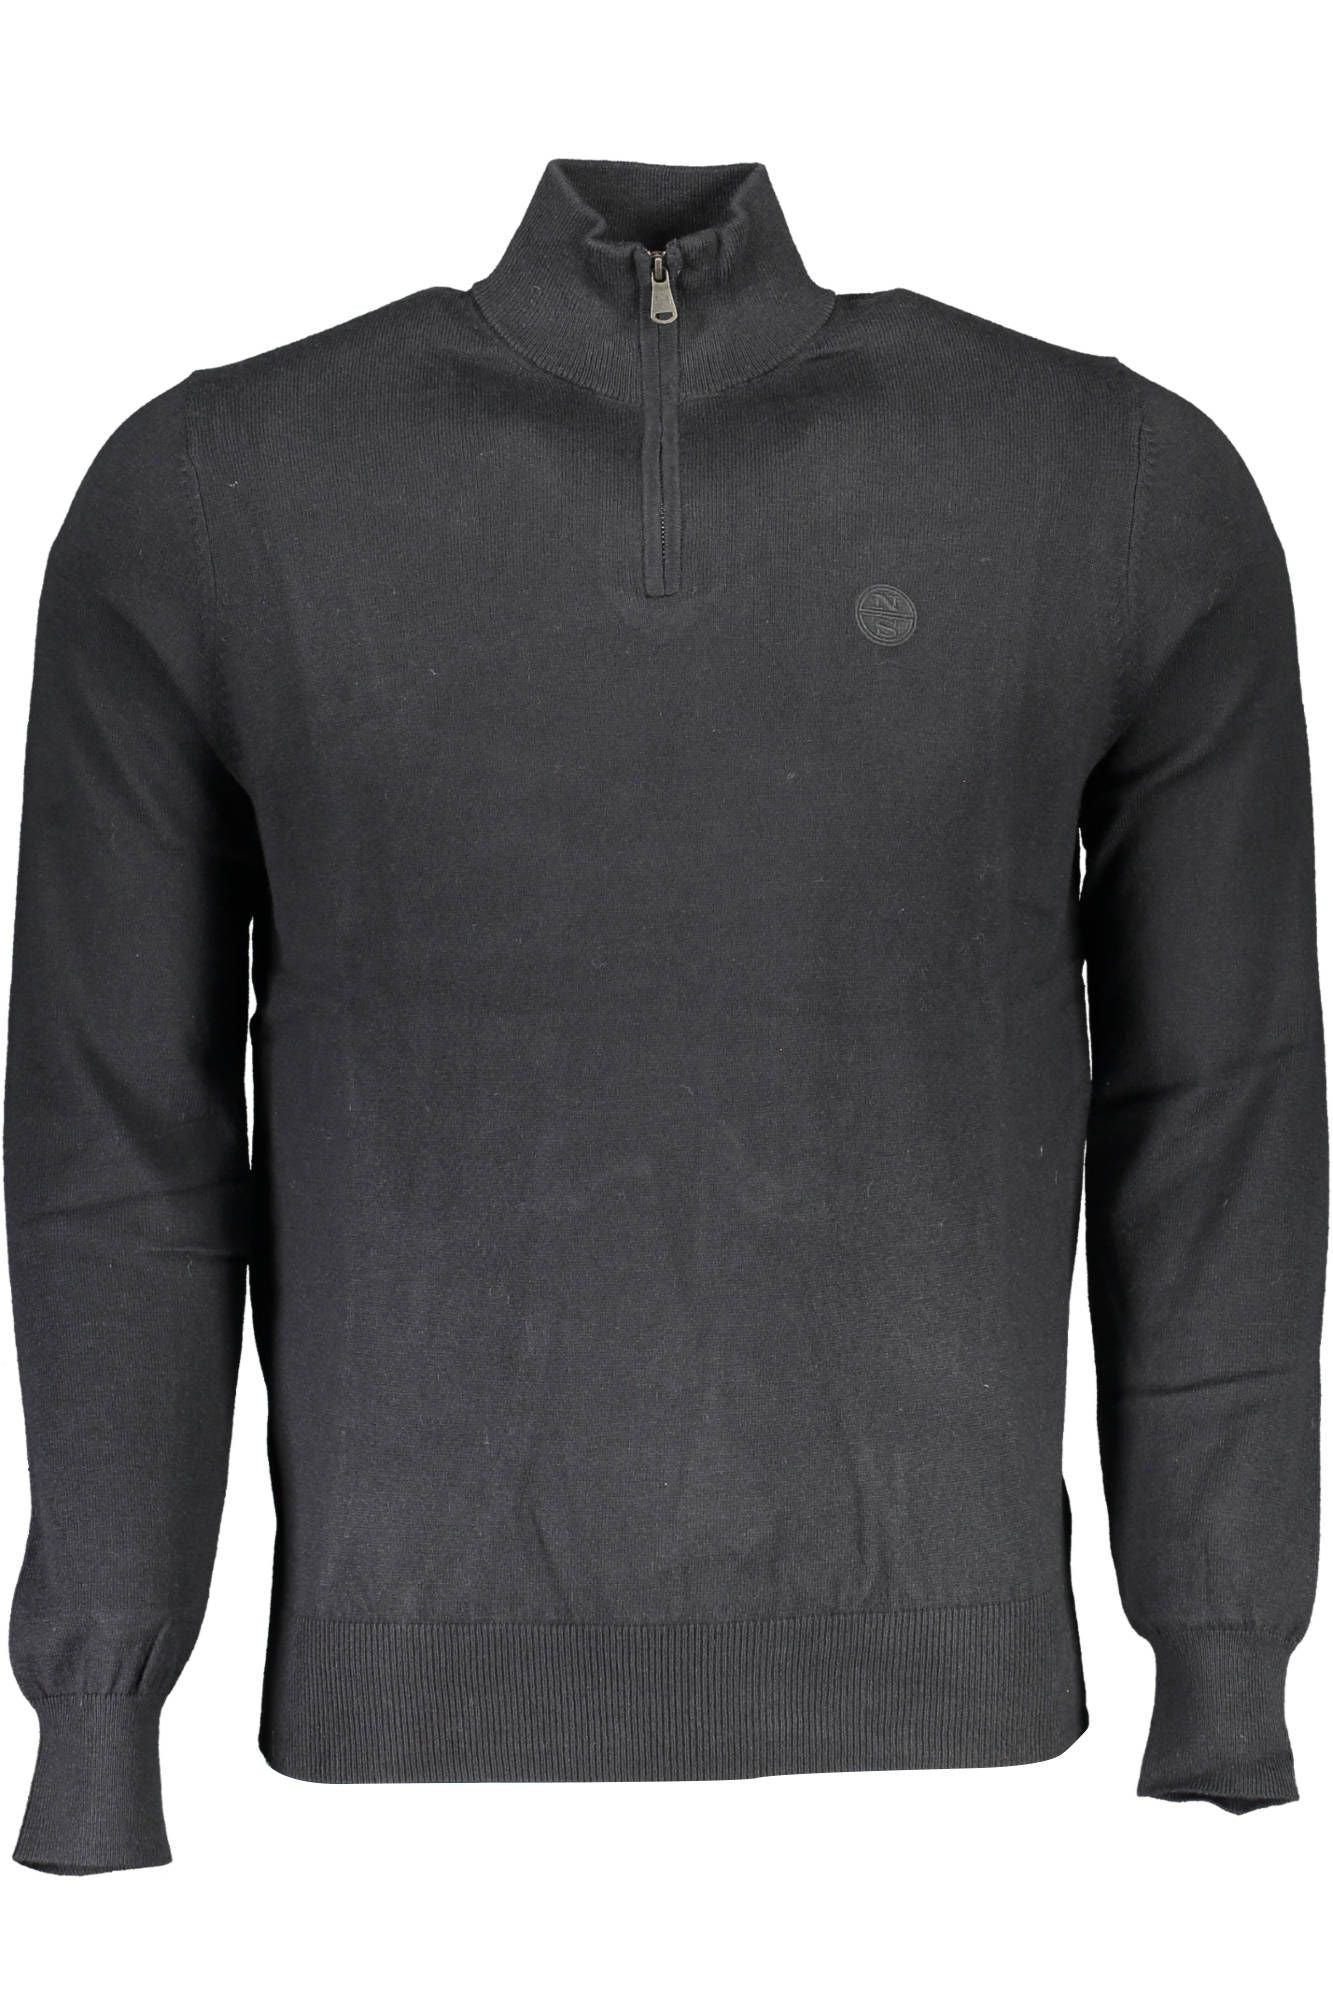 North Sails Eco-Conscious Half-Zip Sweater in Black